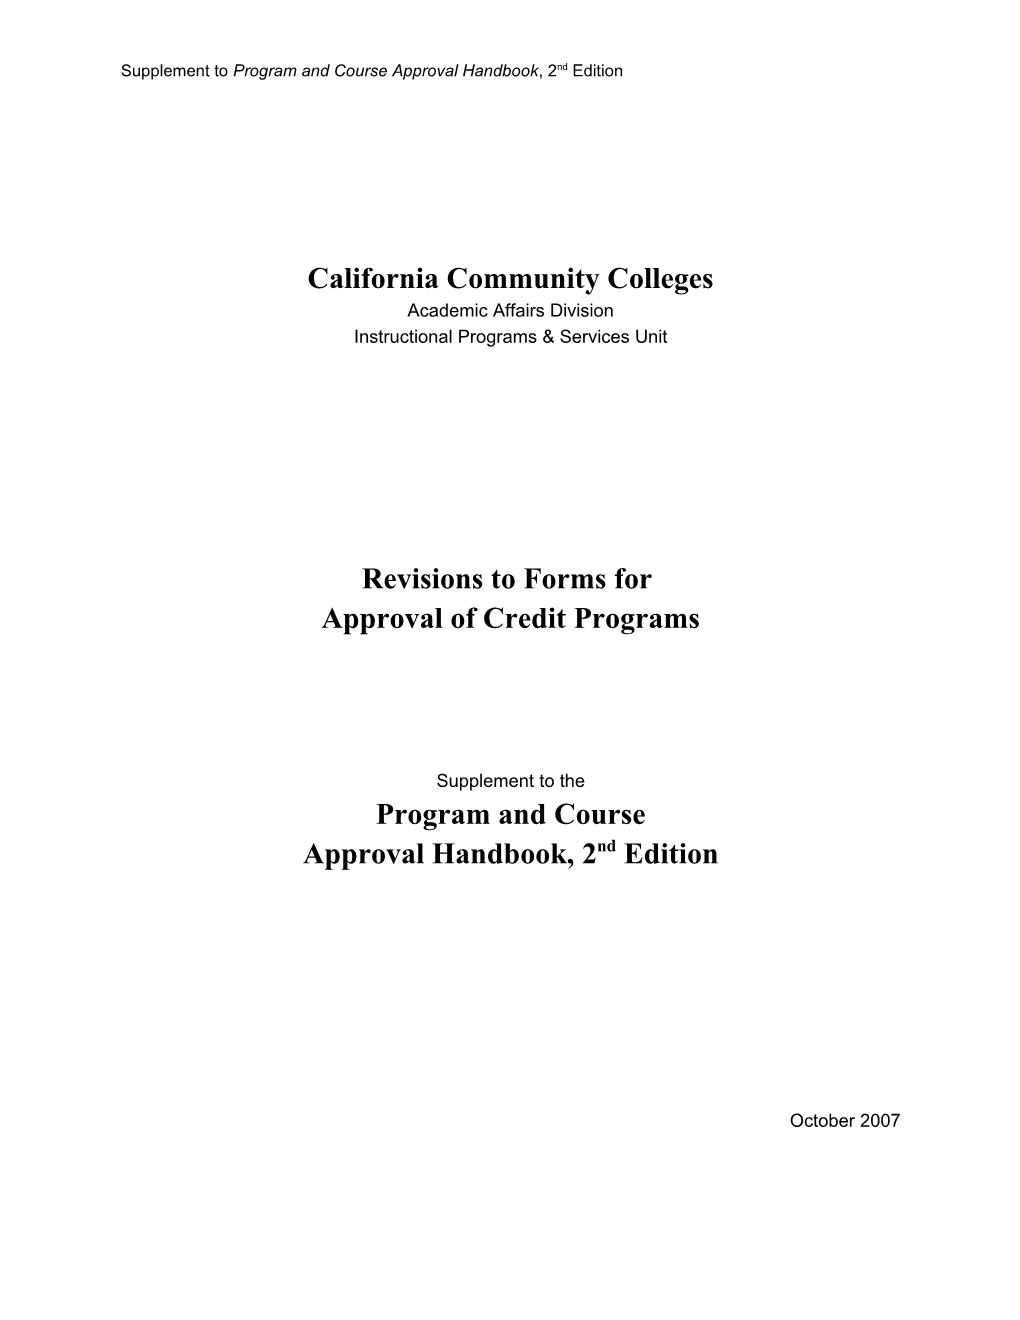 Program & Course Approval Handbook